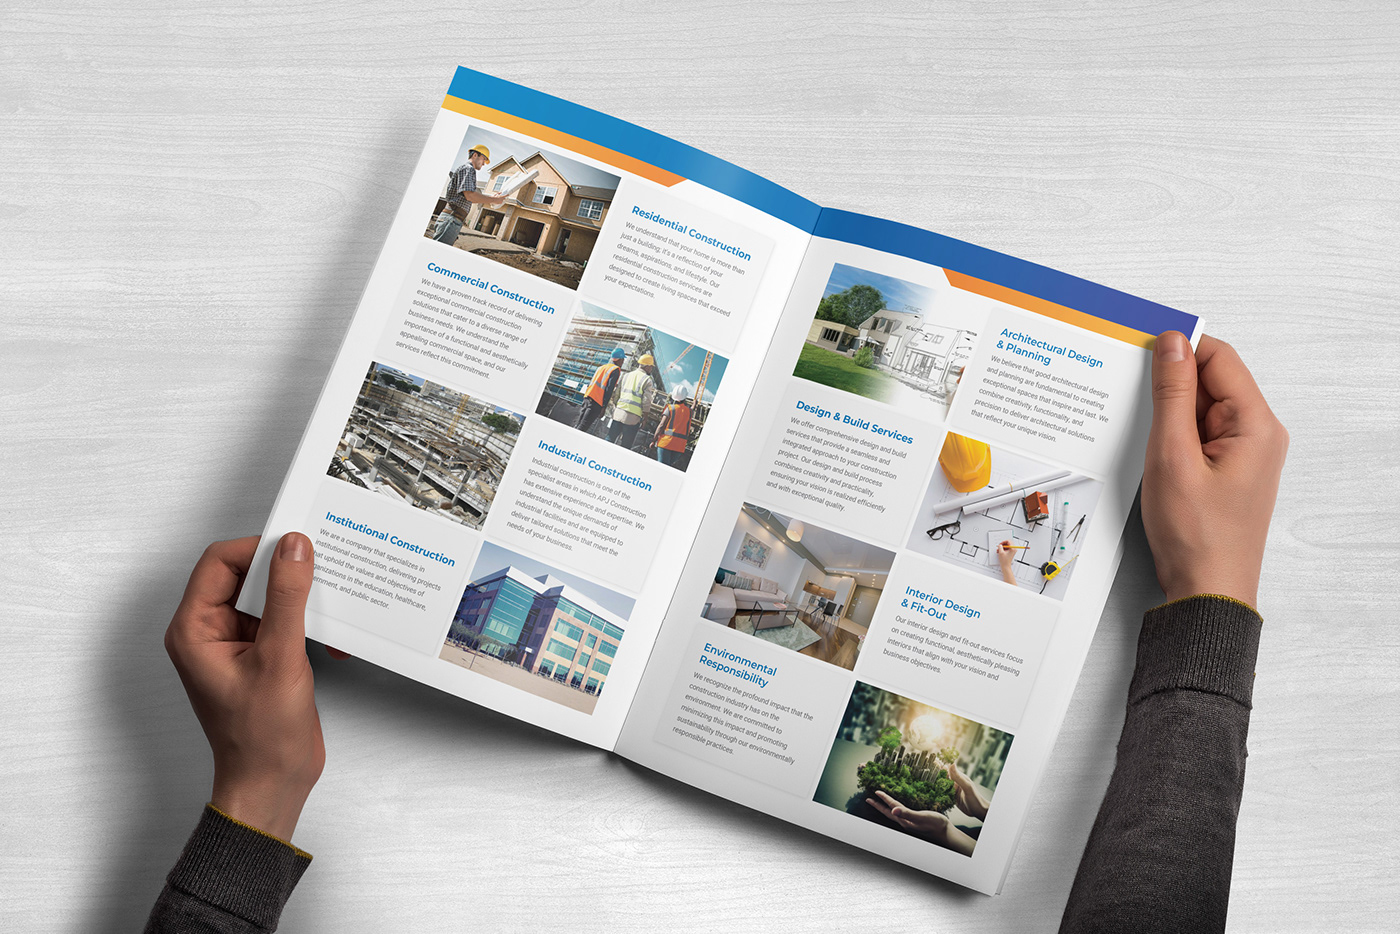 Construction Company Profile Brochure Free Templates, Company profile pdf, Company profile content